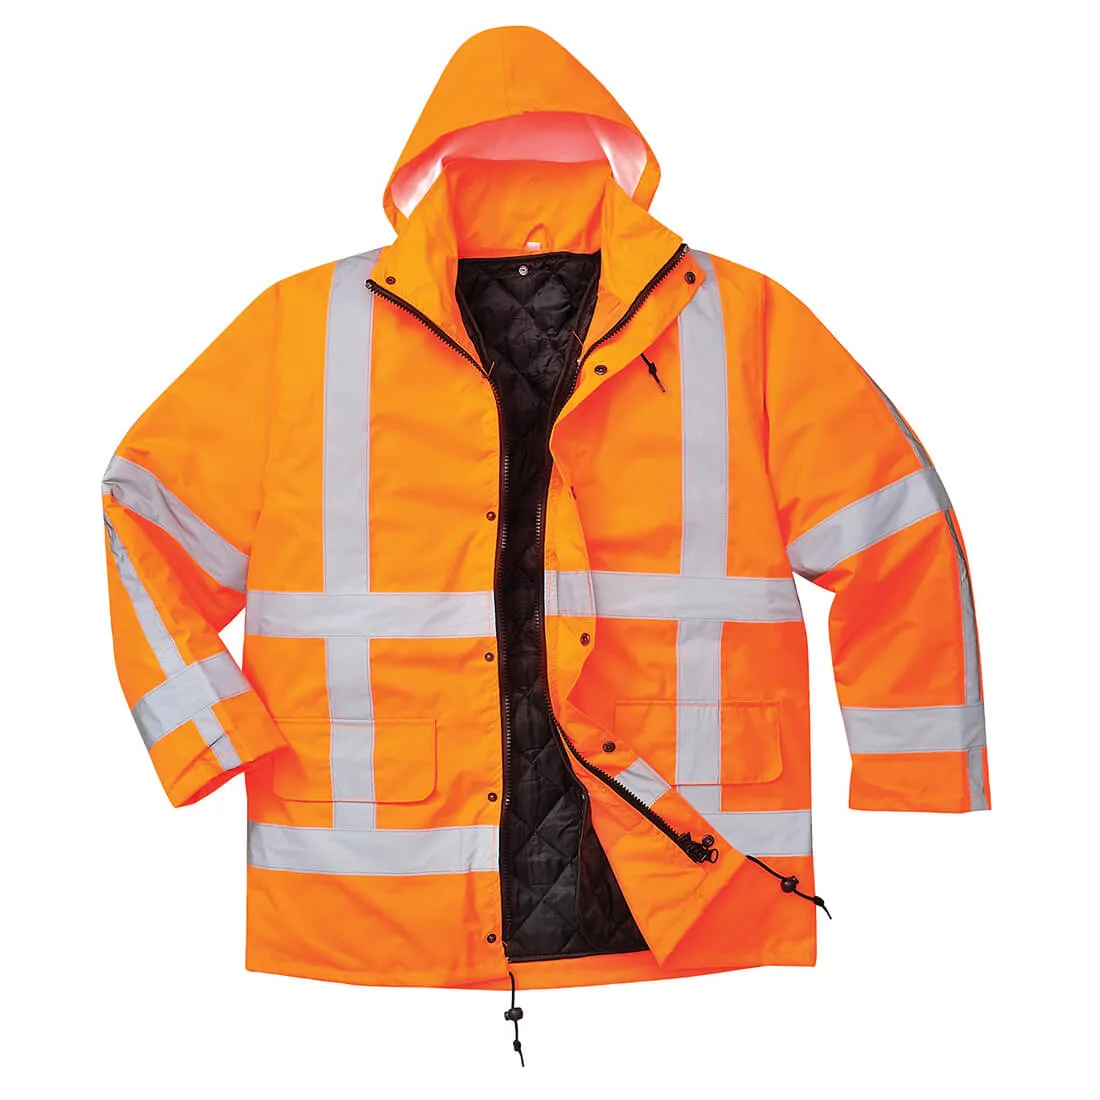 RWS Hi Vis Traffic Jacket and Detachable Lining - Orange, XL